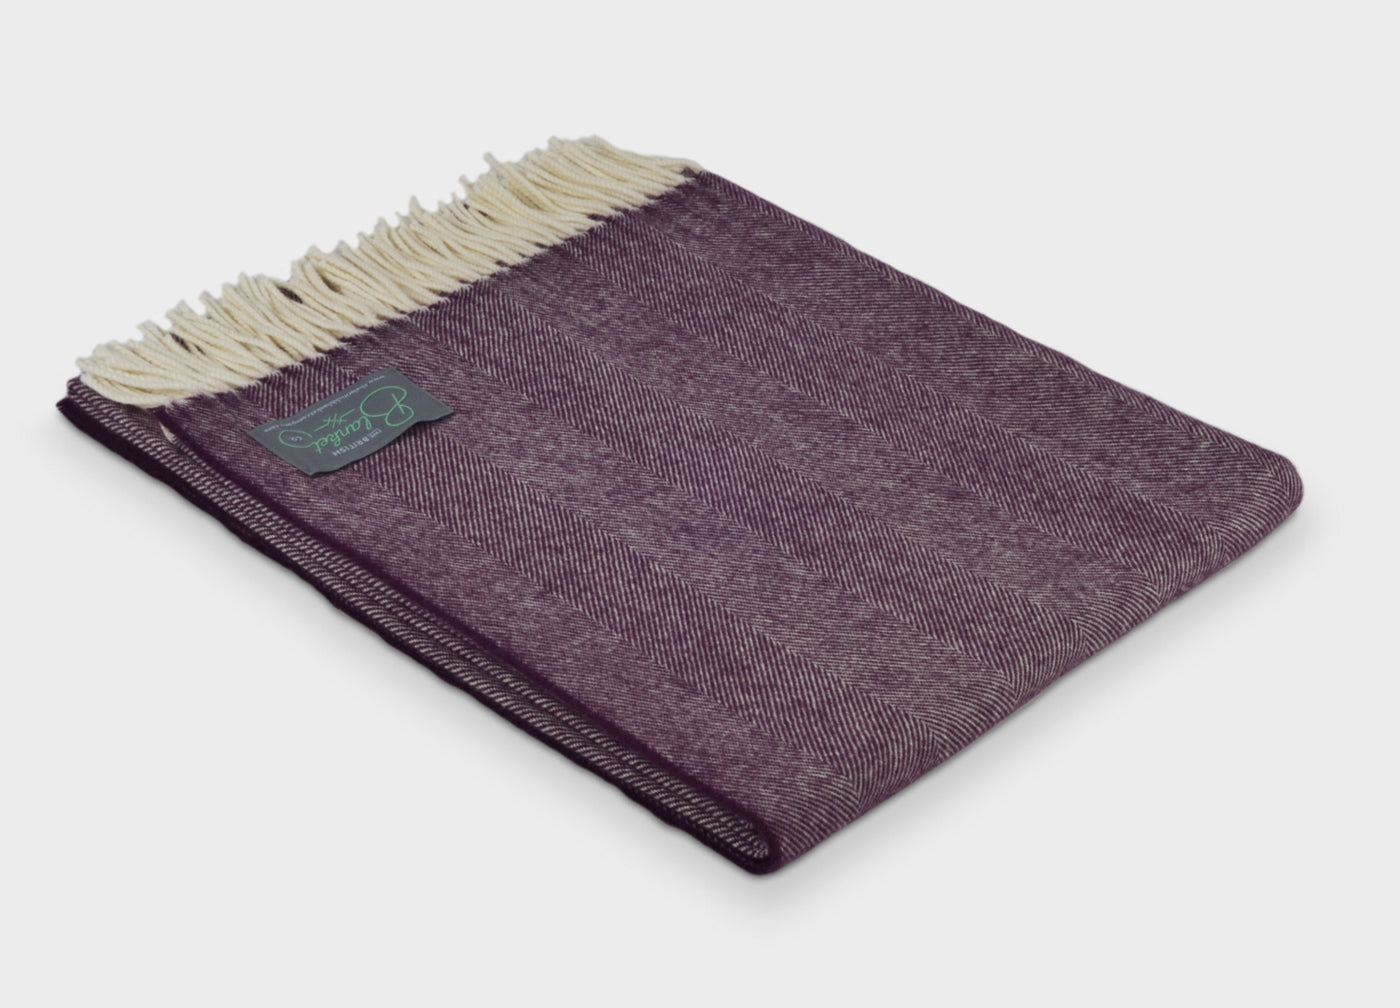 Folded purple herringbone wool throw by The British Blanket Company.